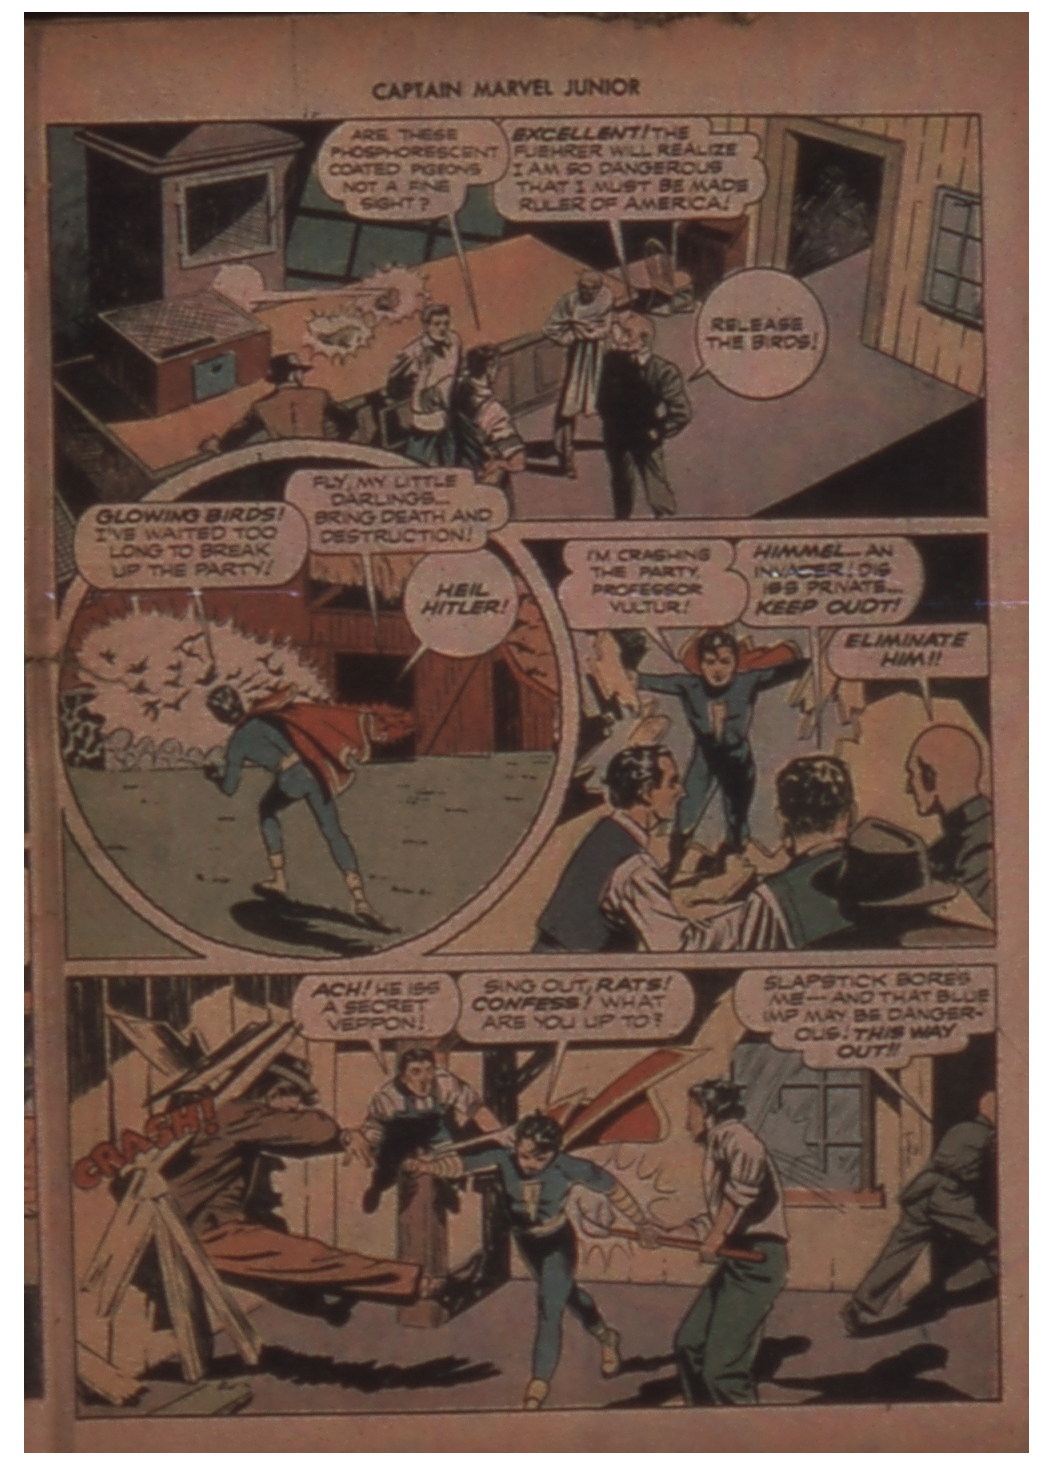 Read online Captain Marvel, Jr. comic -  Issue #18 - 9